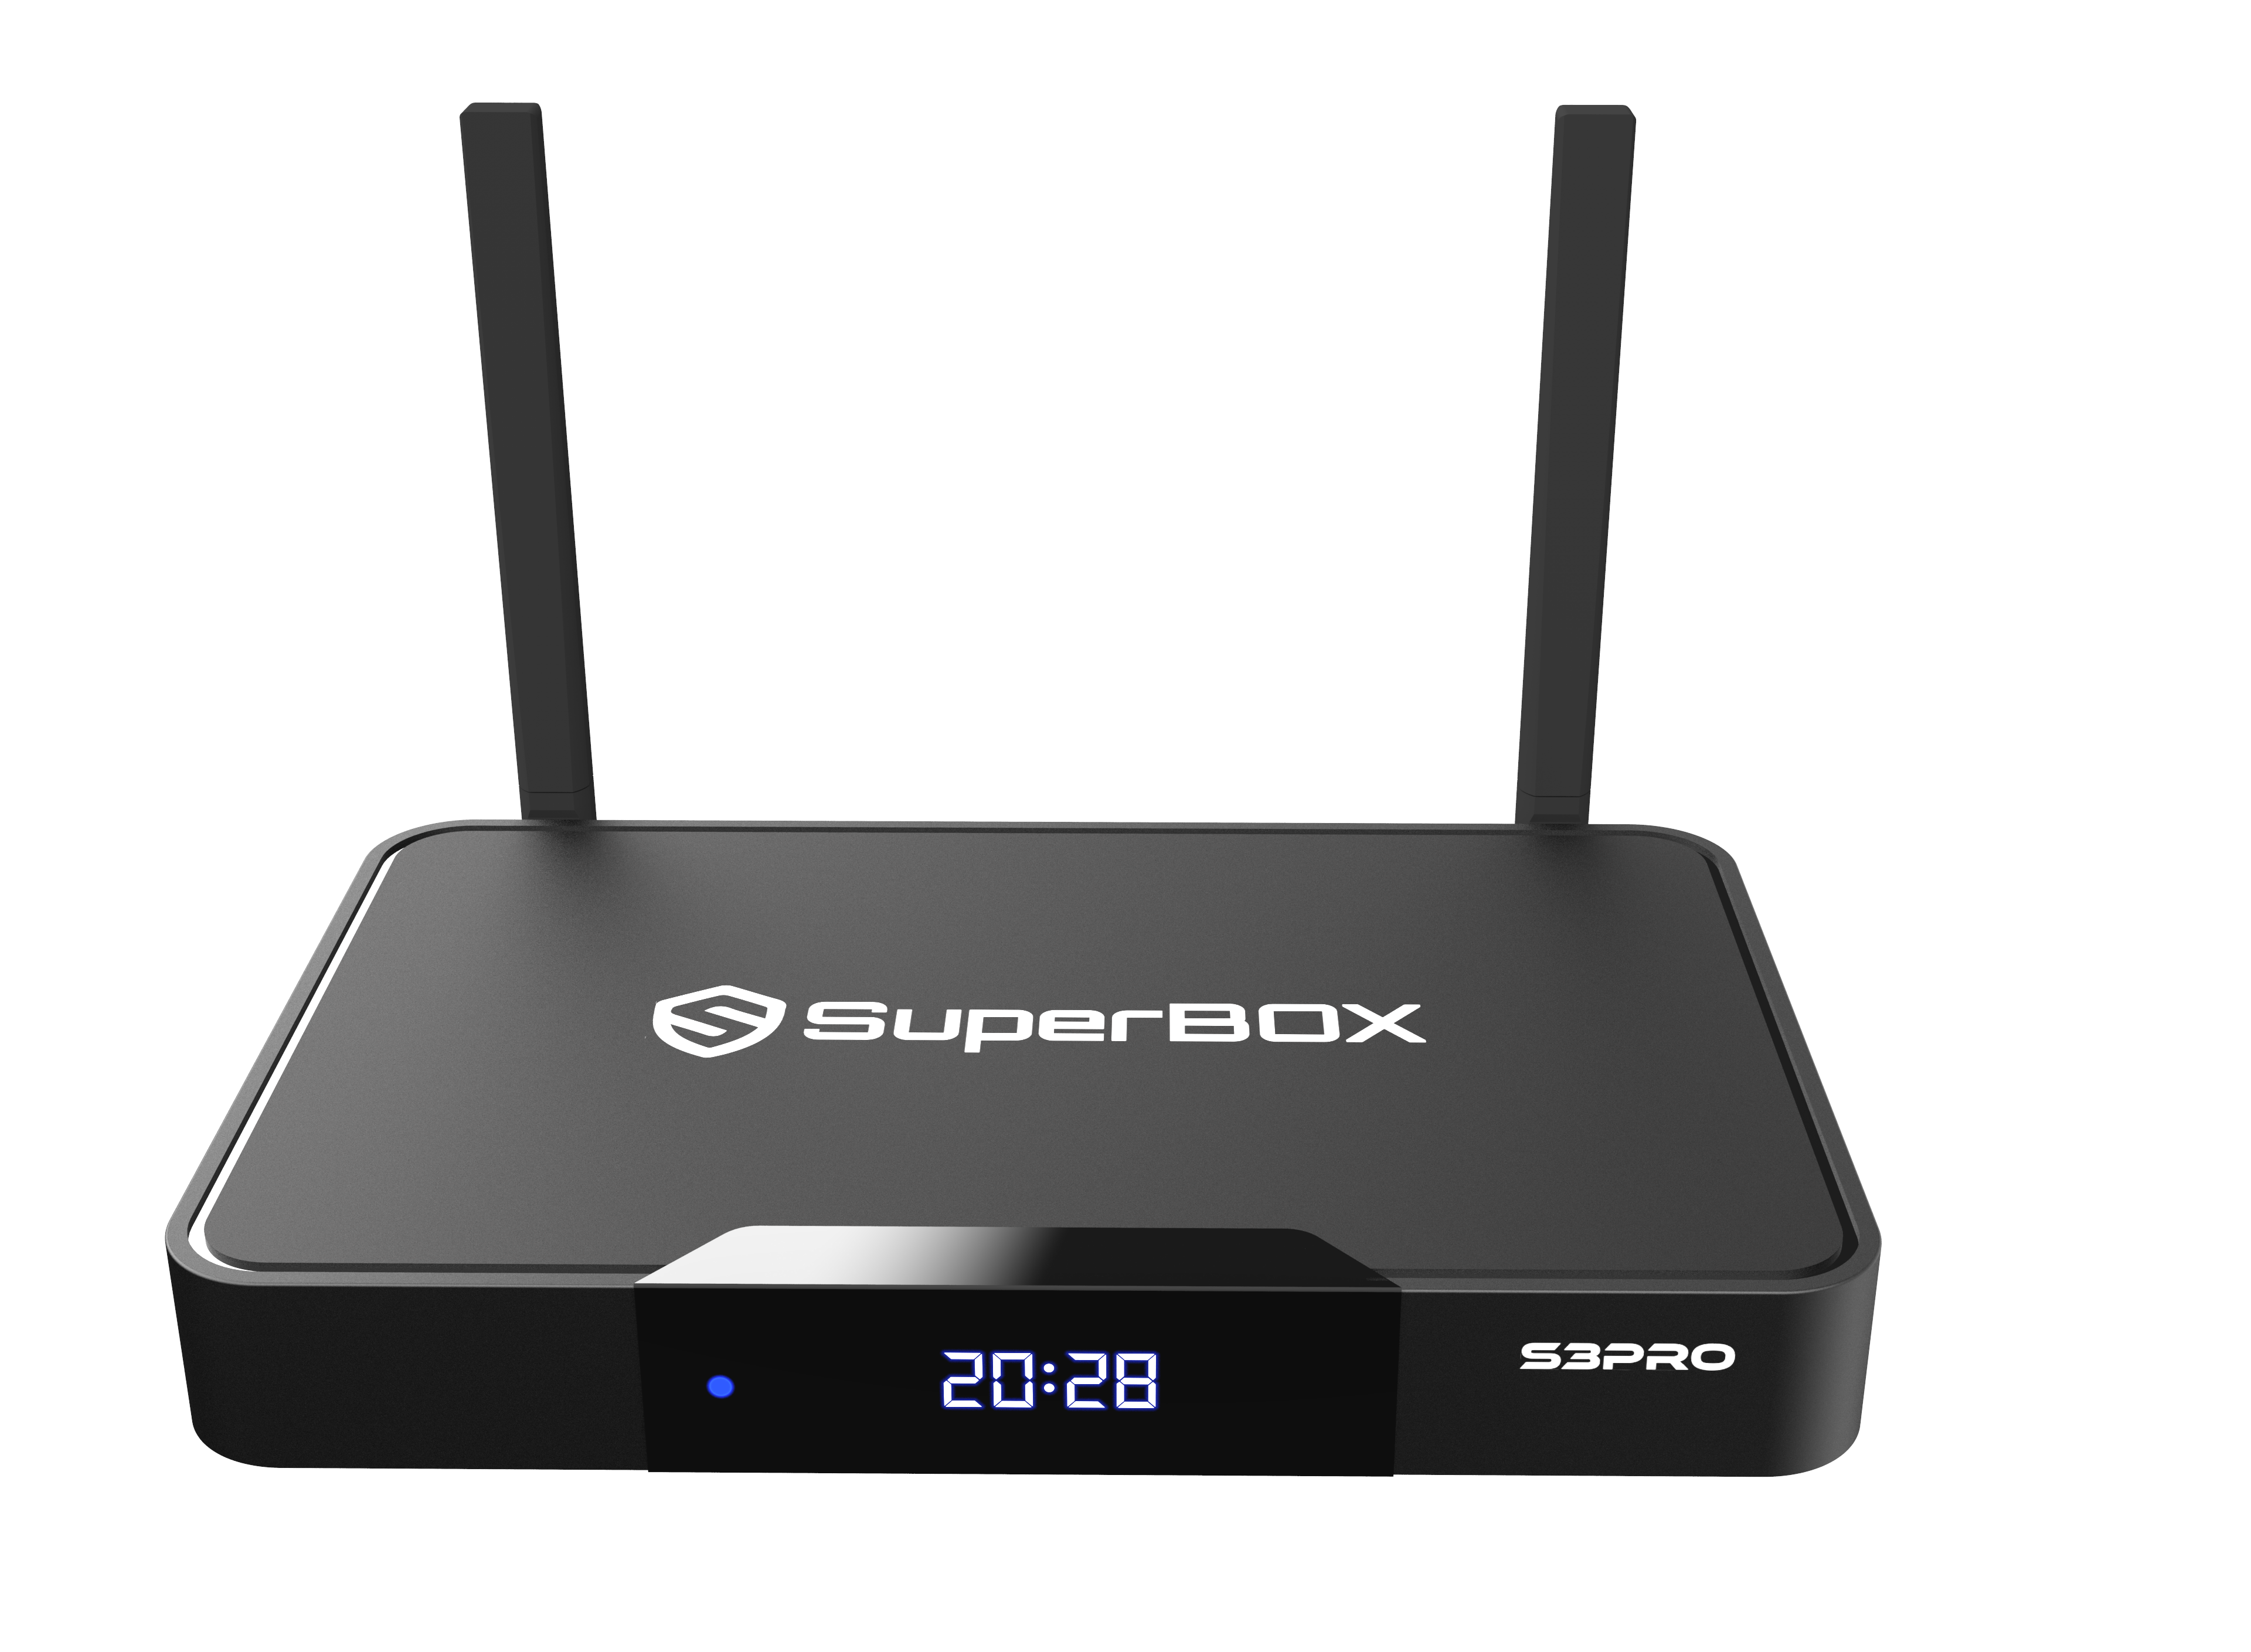 SuperBox S3 Pro